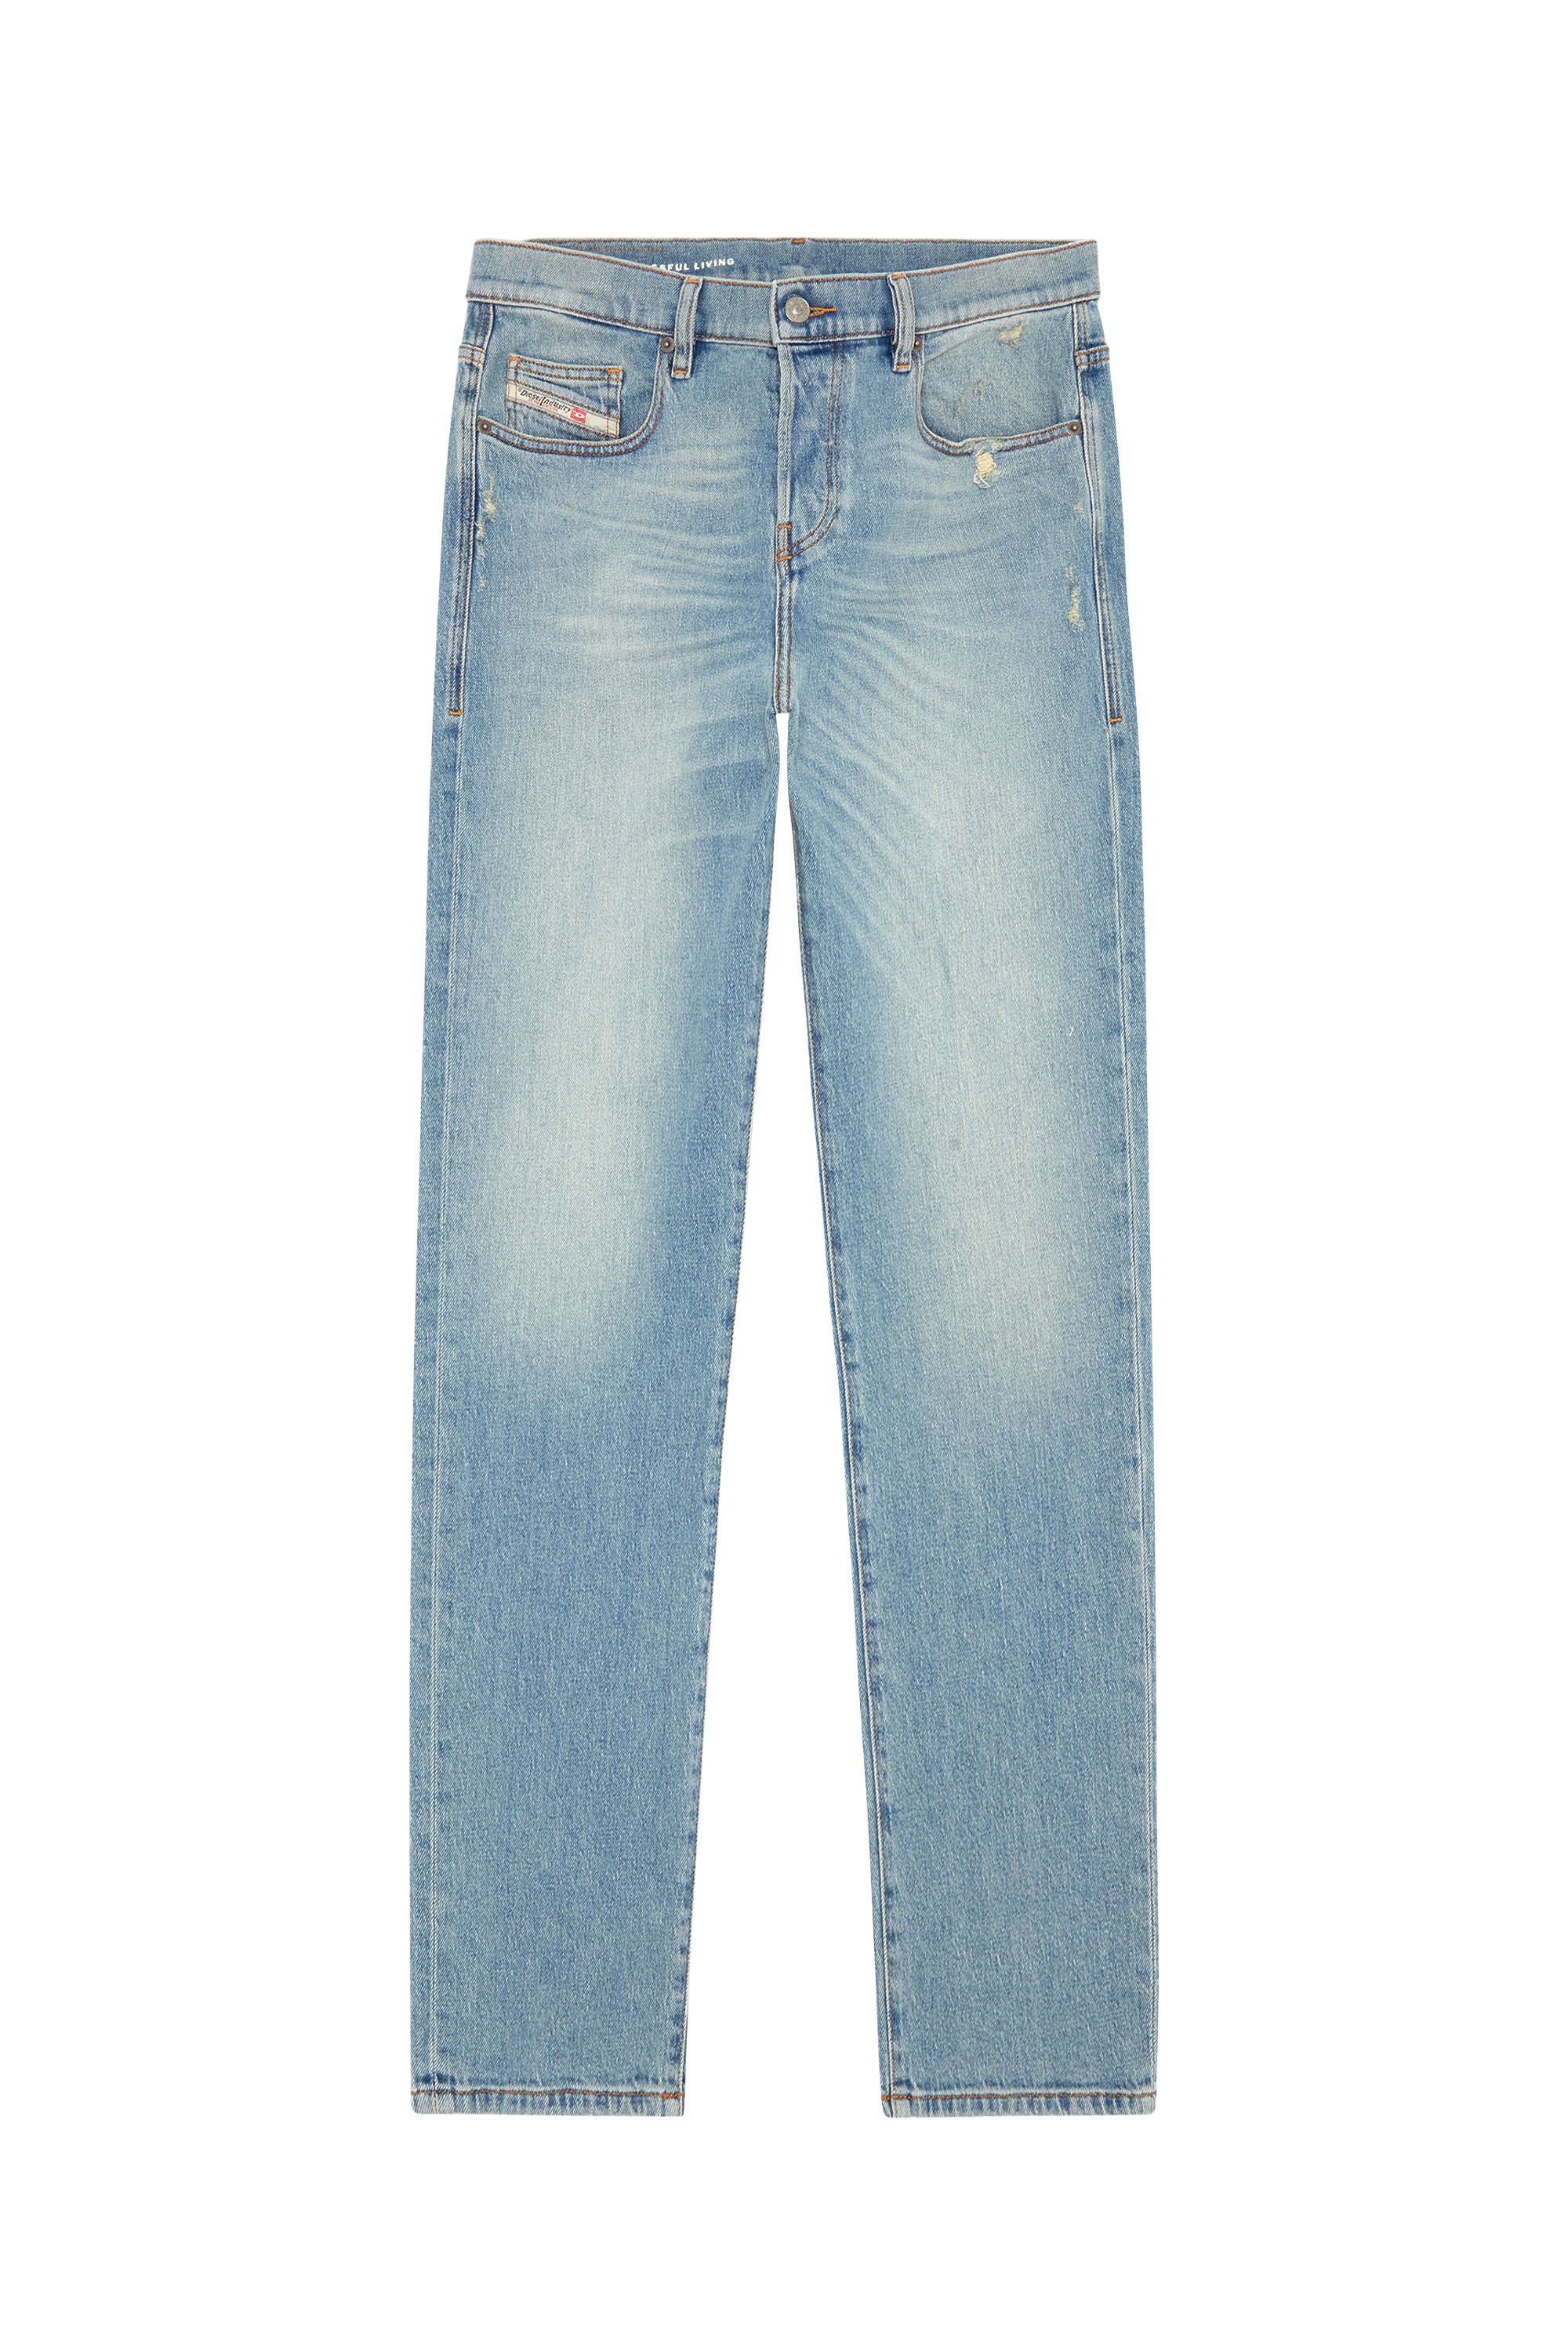 Diesel - Straight Jeans 2020 D-Viker 09H39, Hombre Straight Jeans - 2020 D-Viker in Azul marino - Image 3